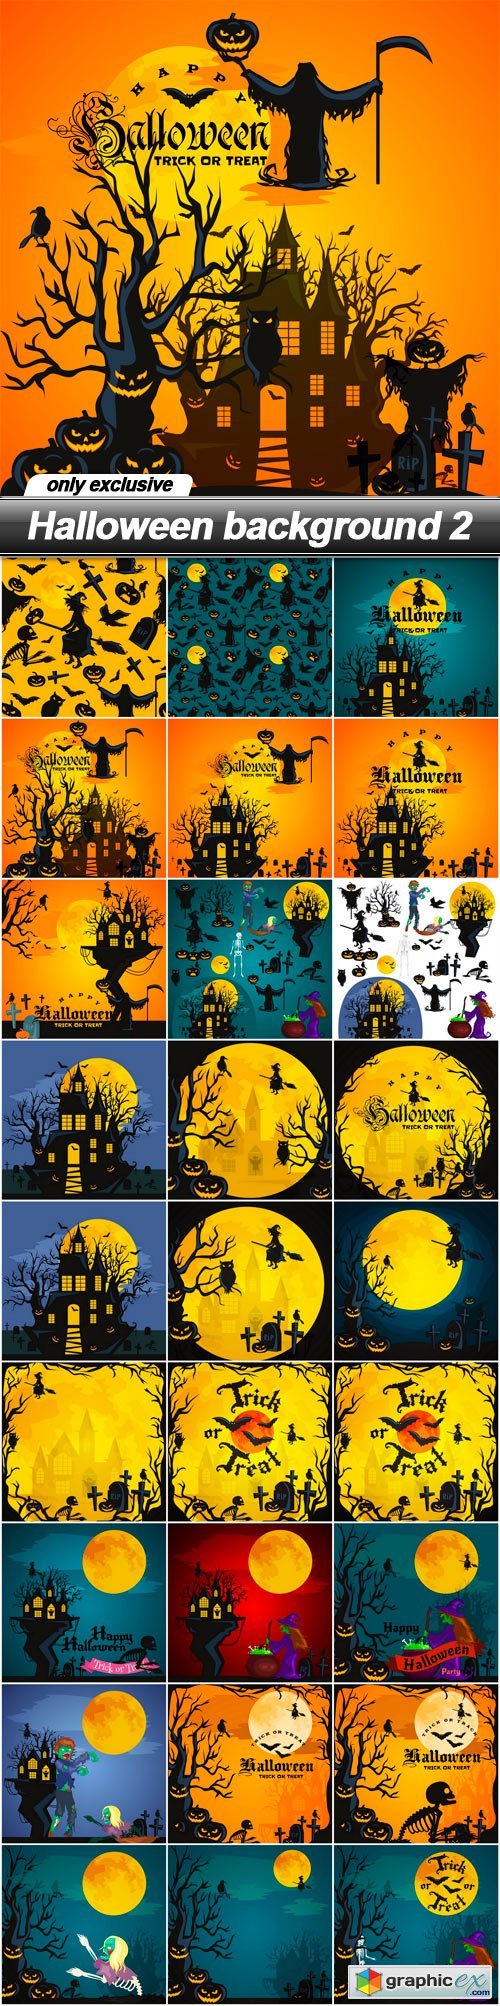 Halloween background 2 - 51 EPS